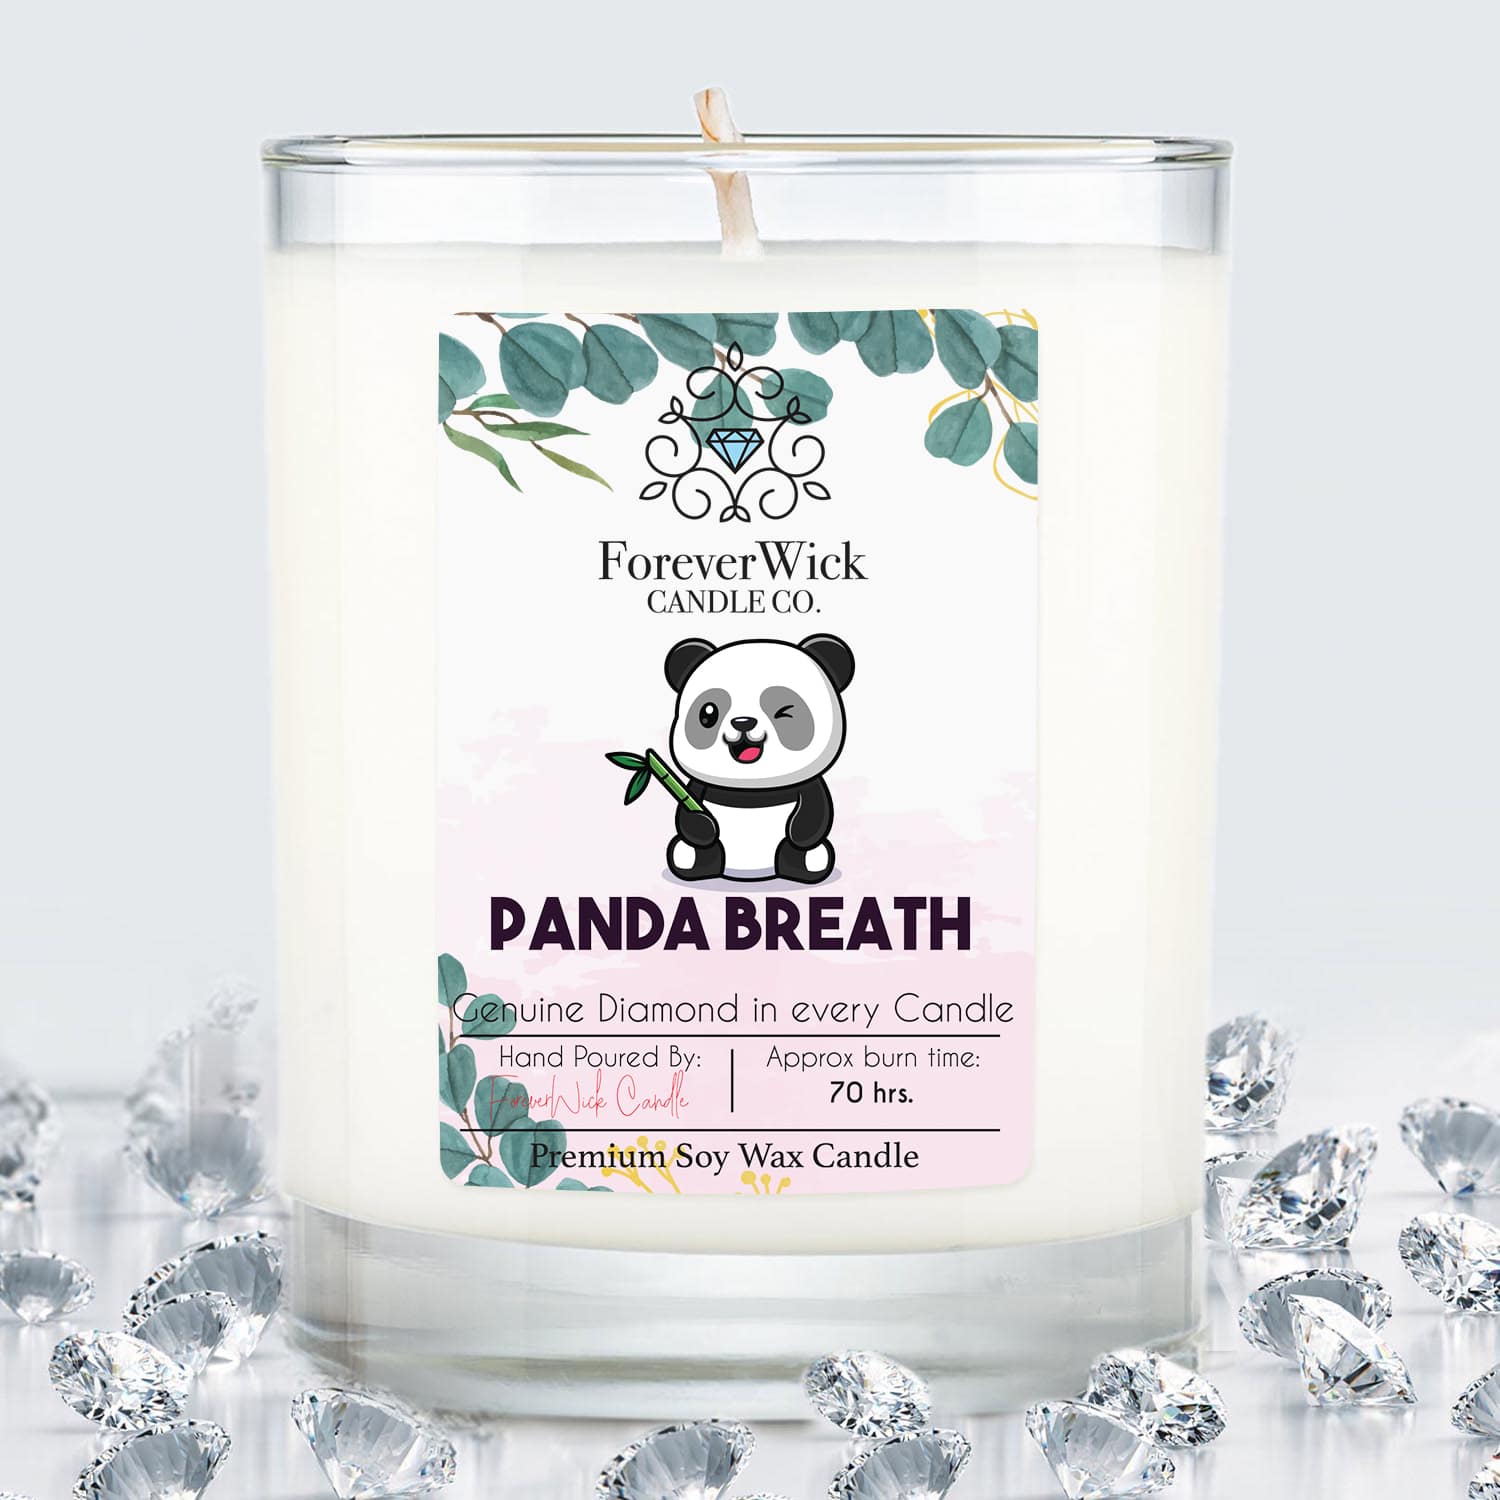 Panda Breath Diamond Candle